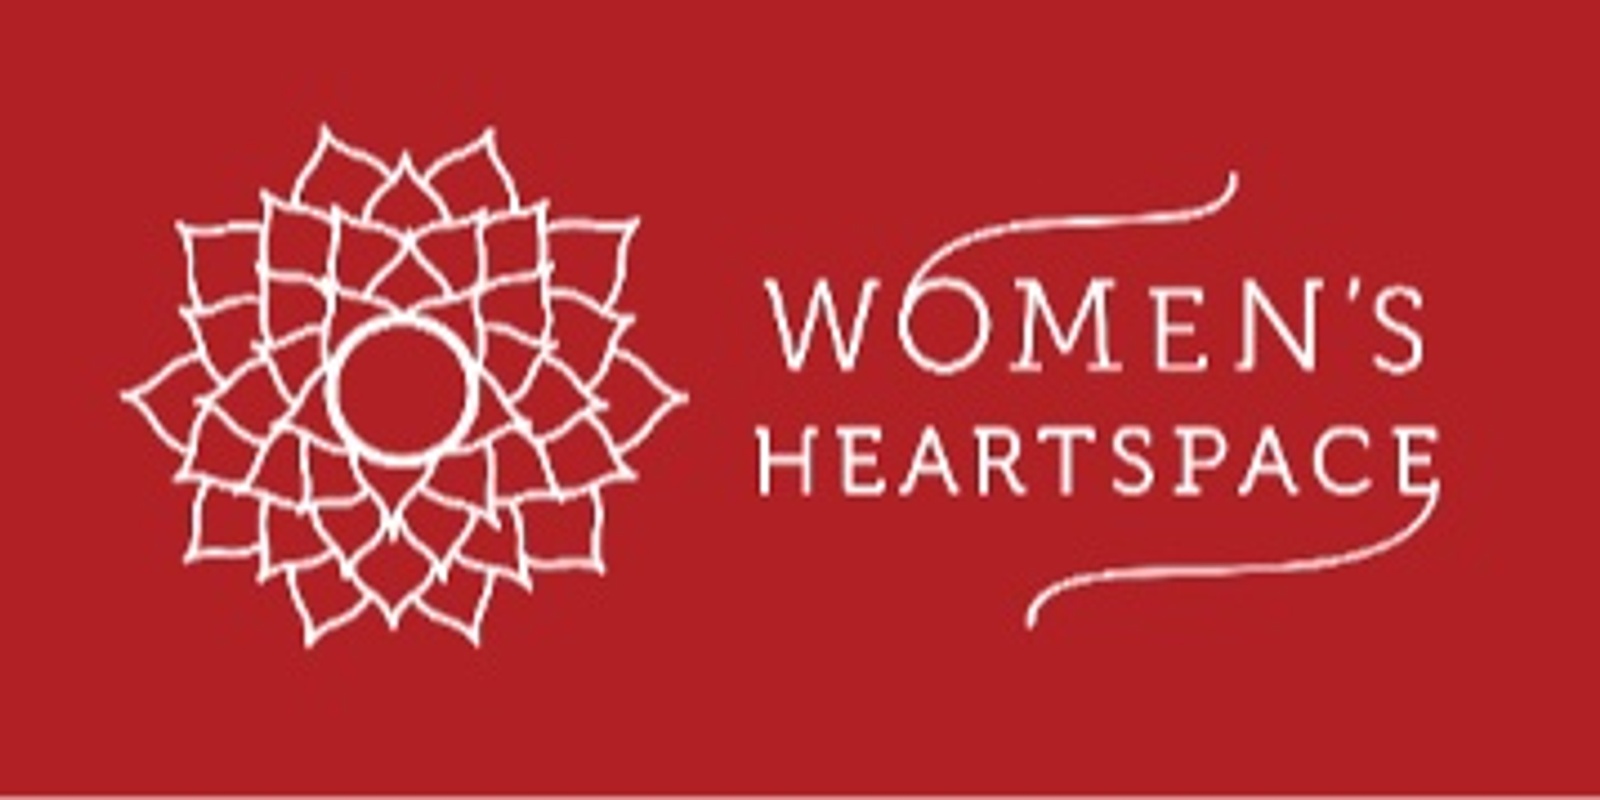 Anna Clarke from Women's Heartspace's banner